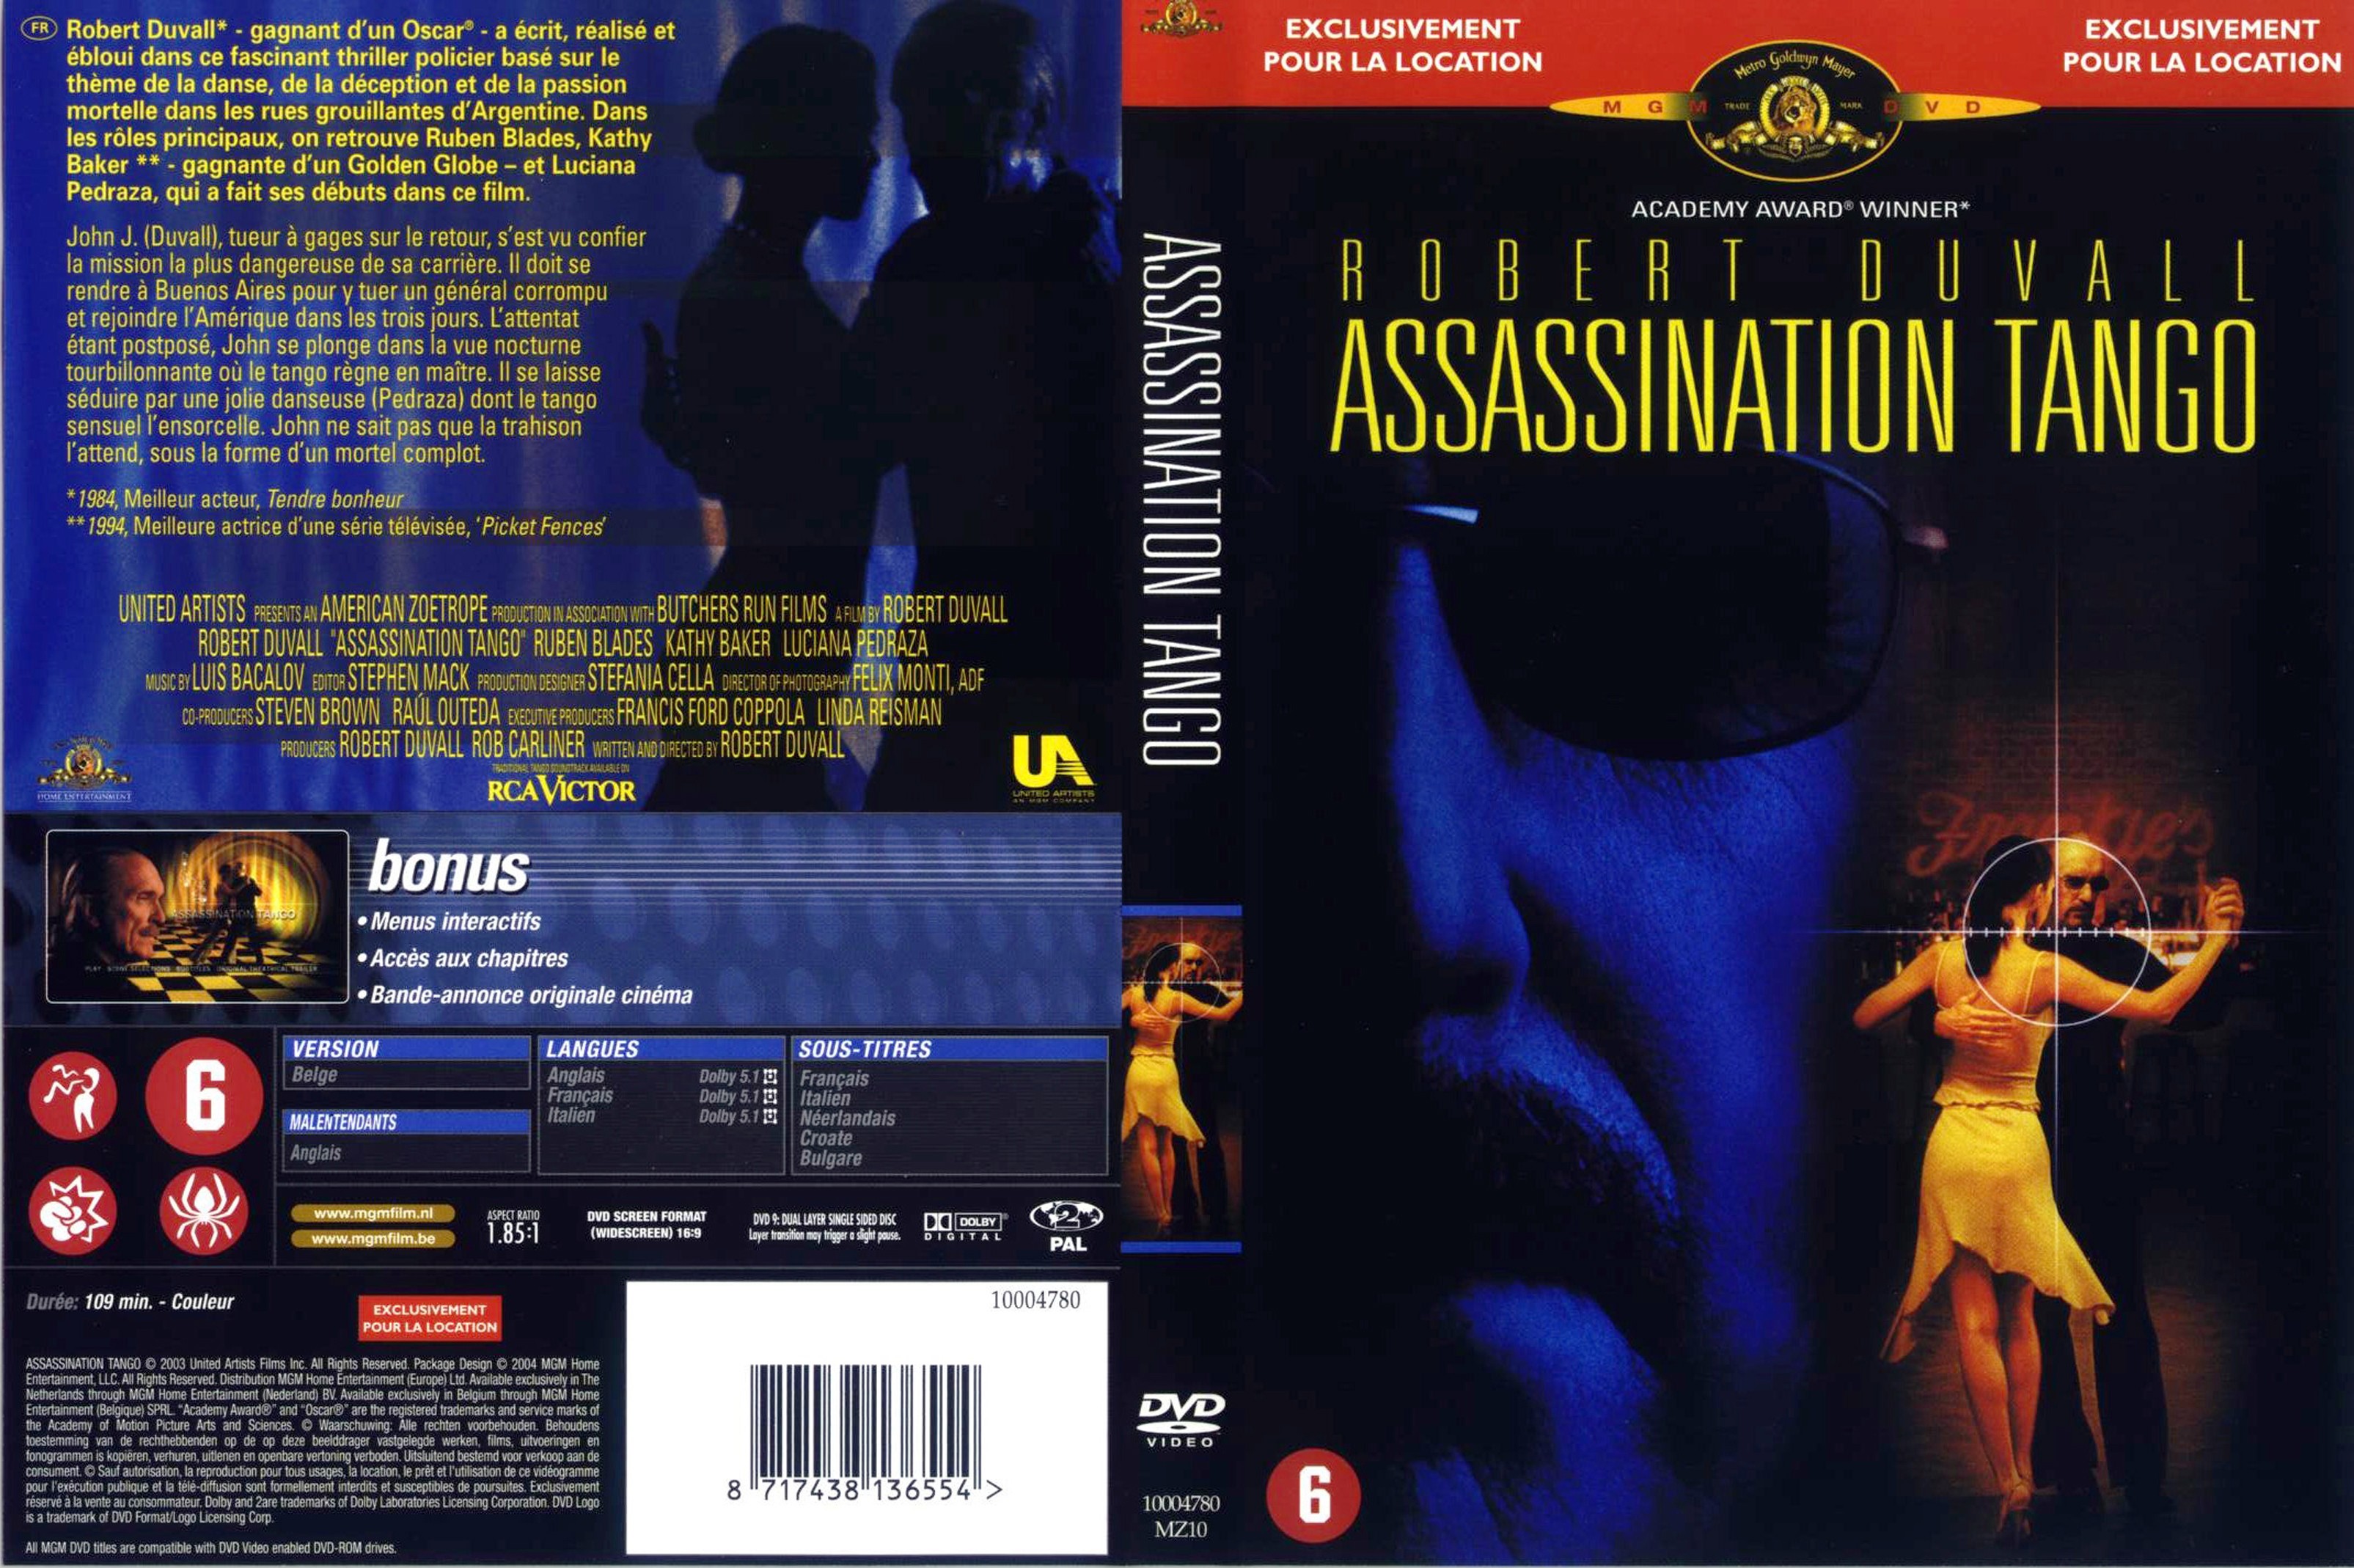 Jaquette DVD Assassination tango